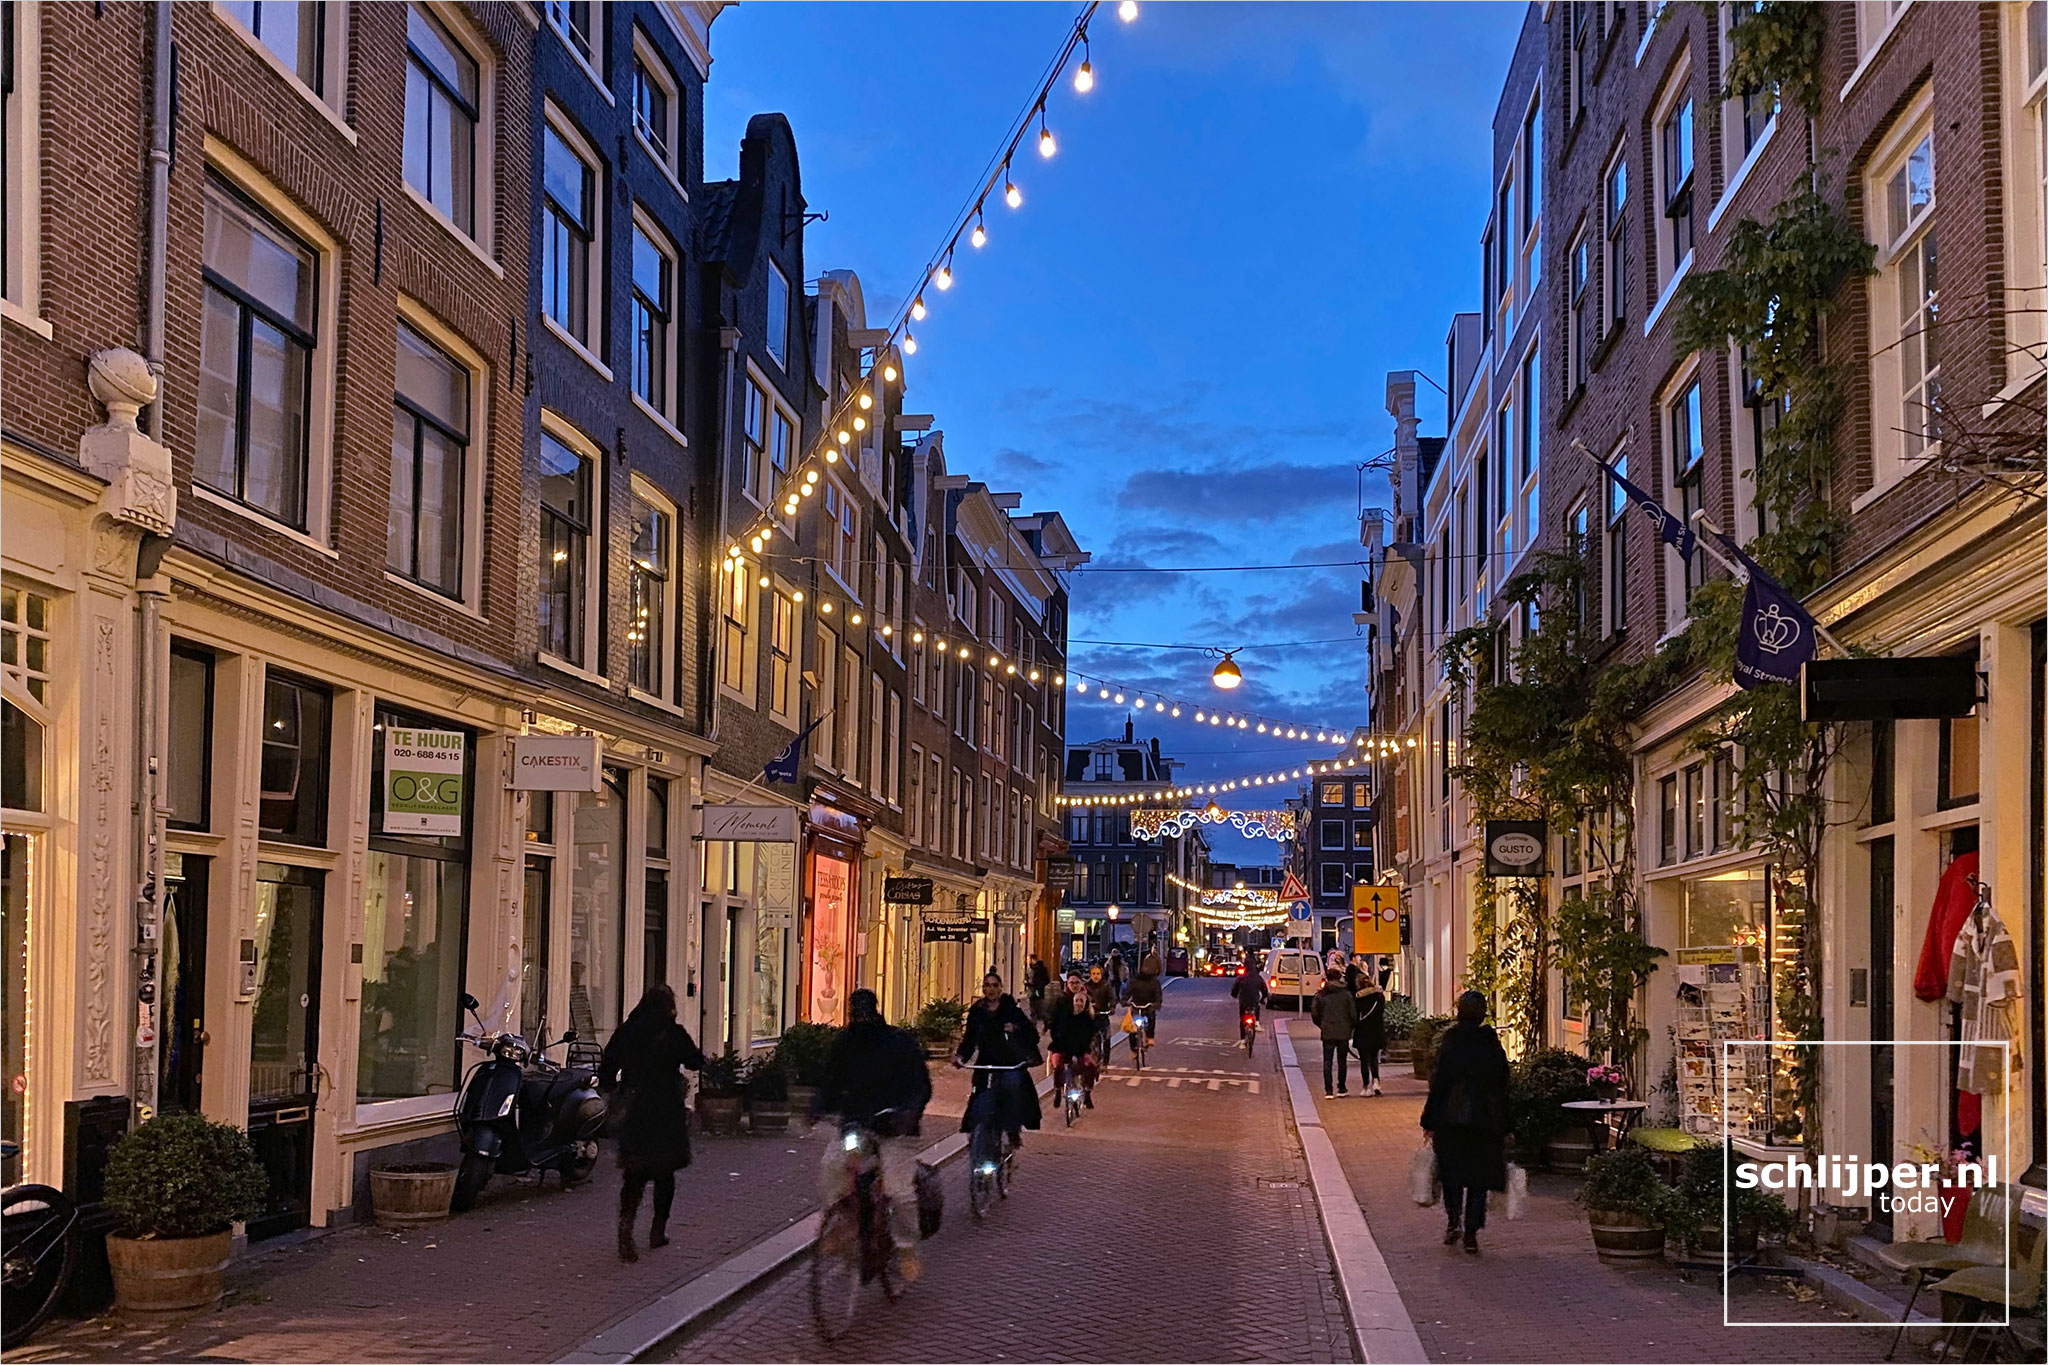 The Netherlands, Amsterdam, 4 december 2020